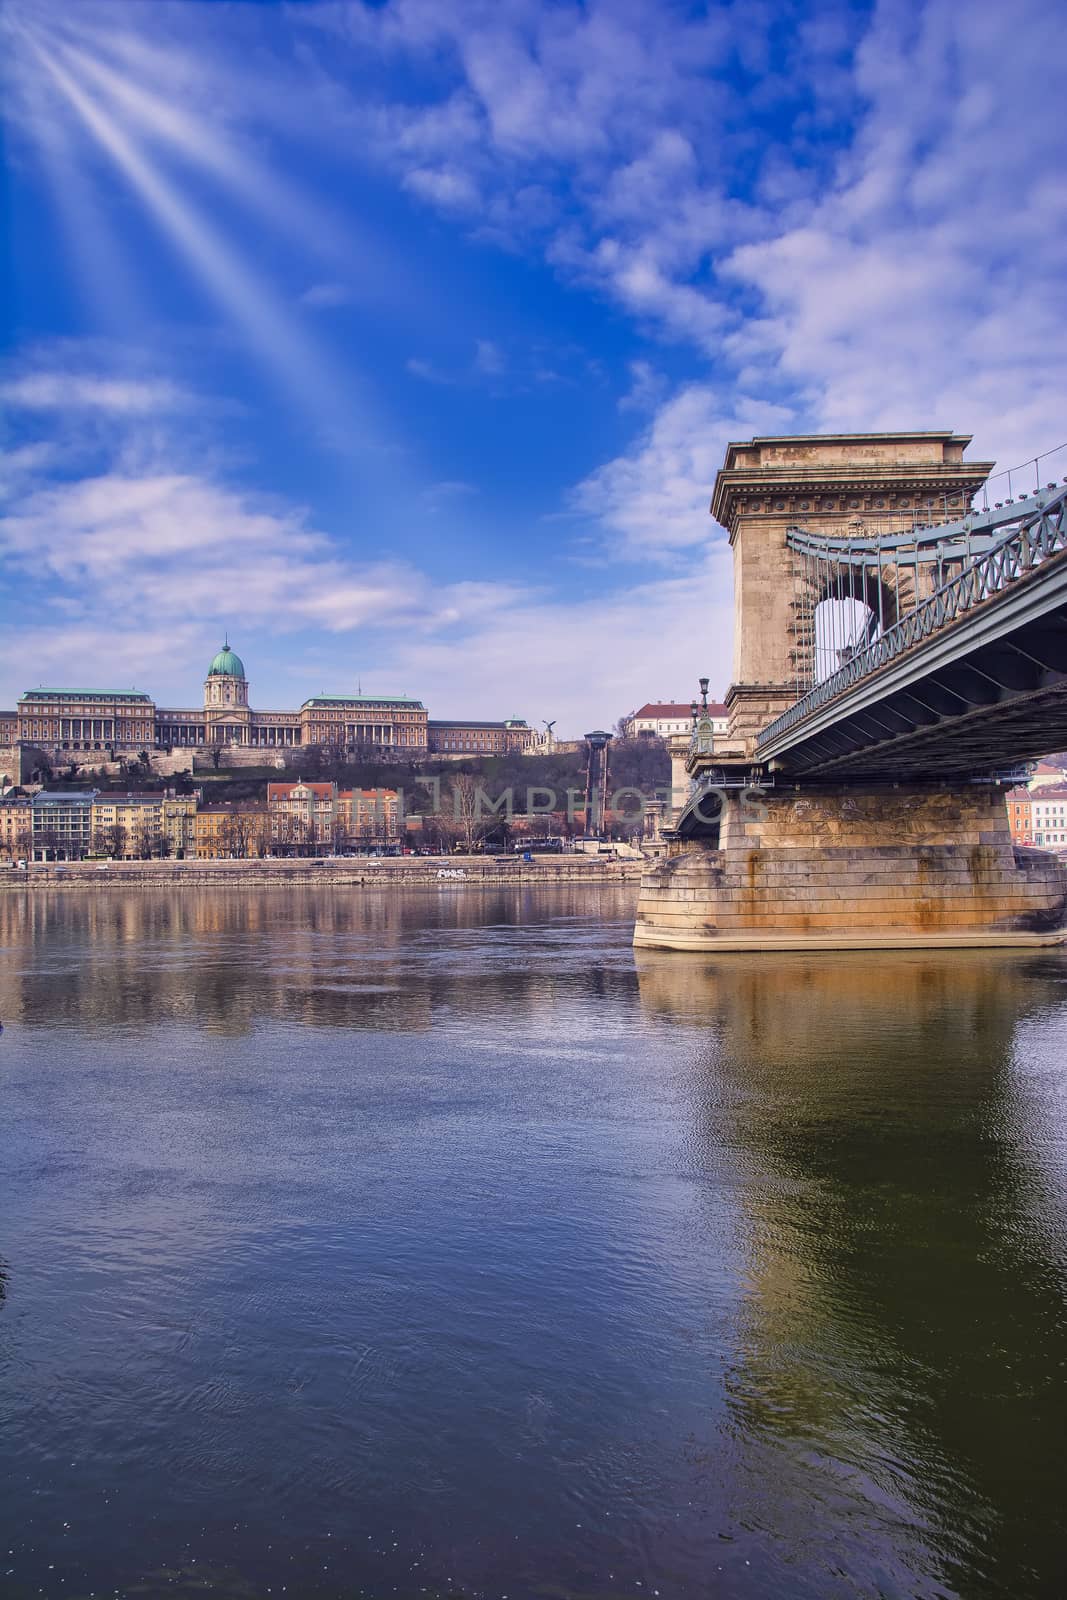 Szechenyi Chain bridge over Danube river, Budapest, Hungary. by CreativePhotoSpain